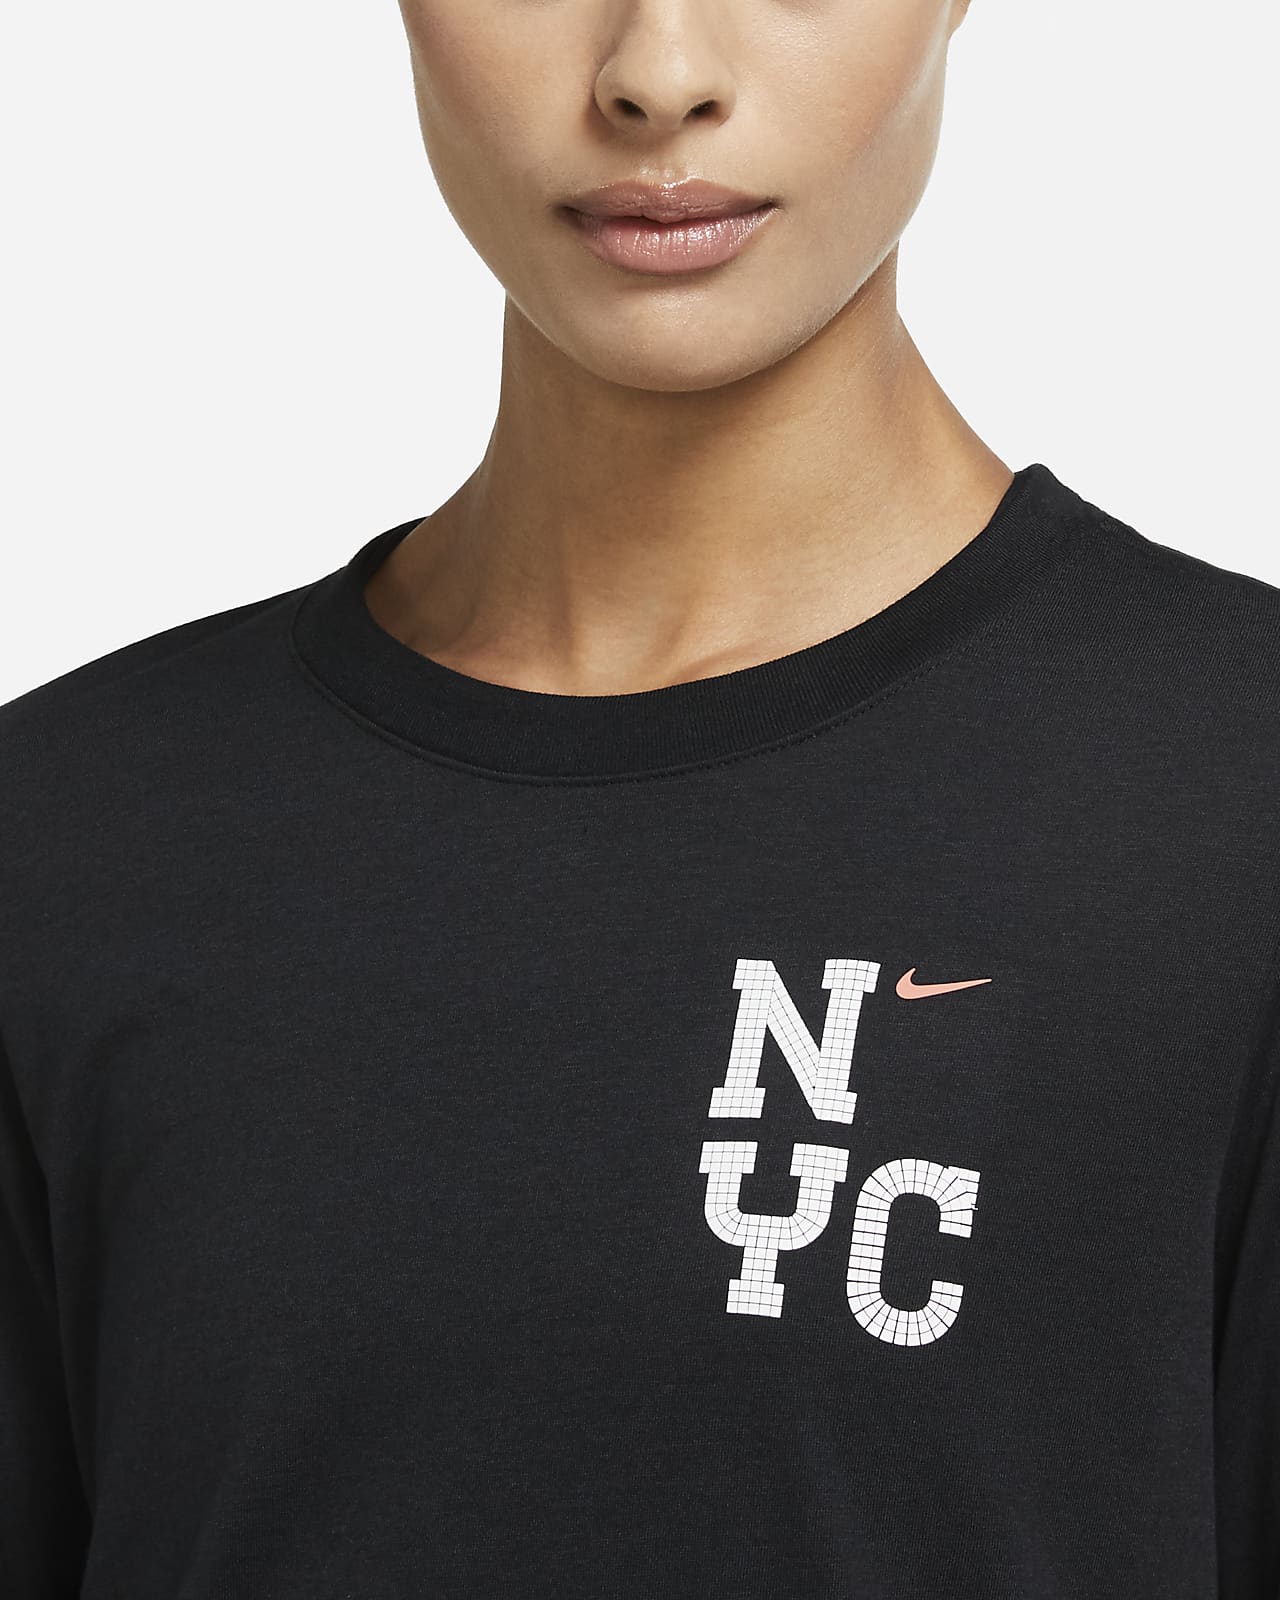 Buy > nike running t shirts women's > in stock